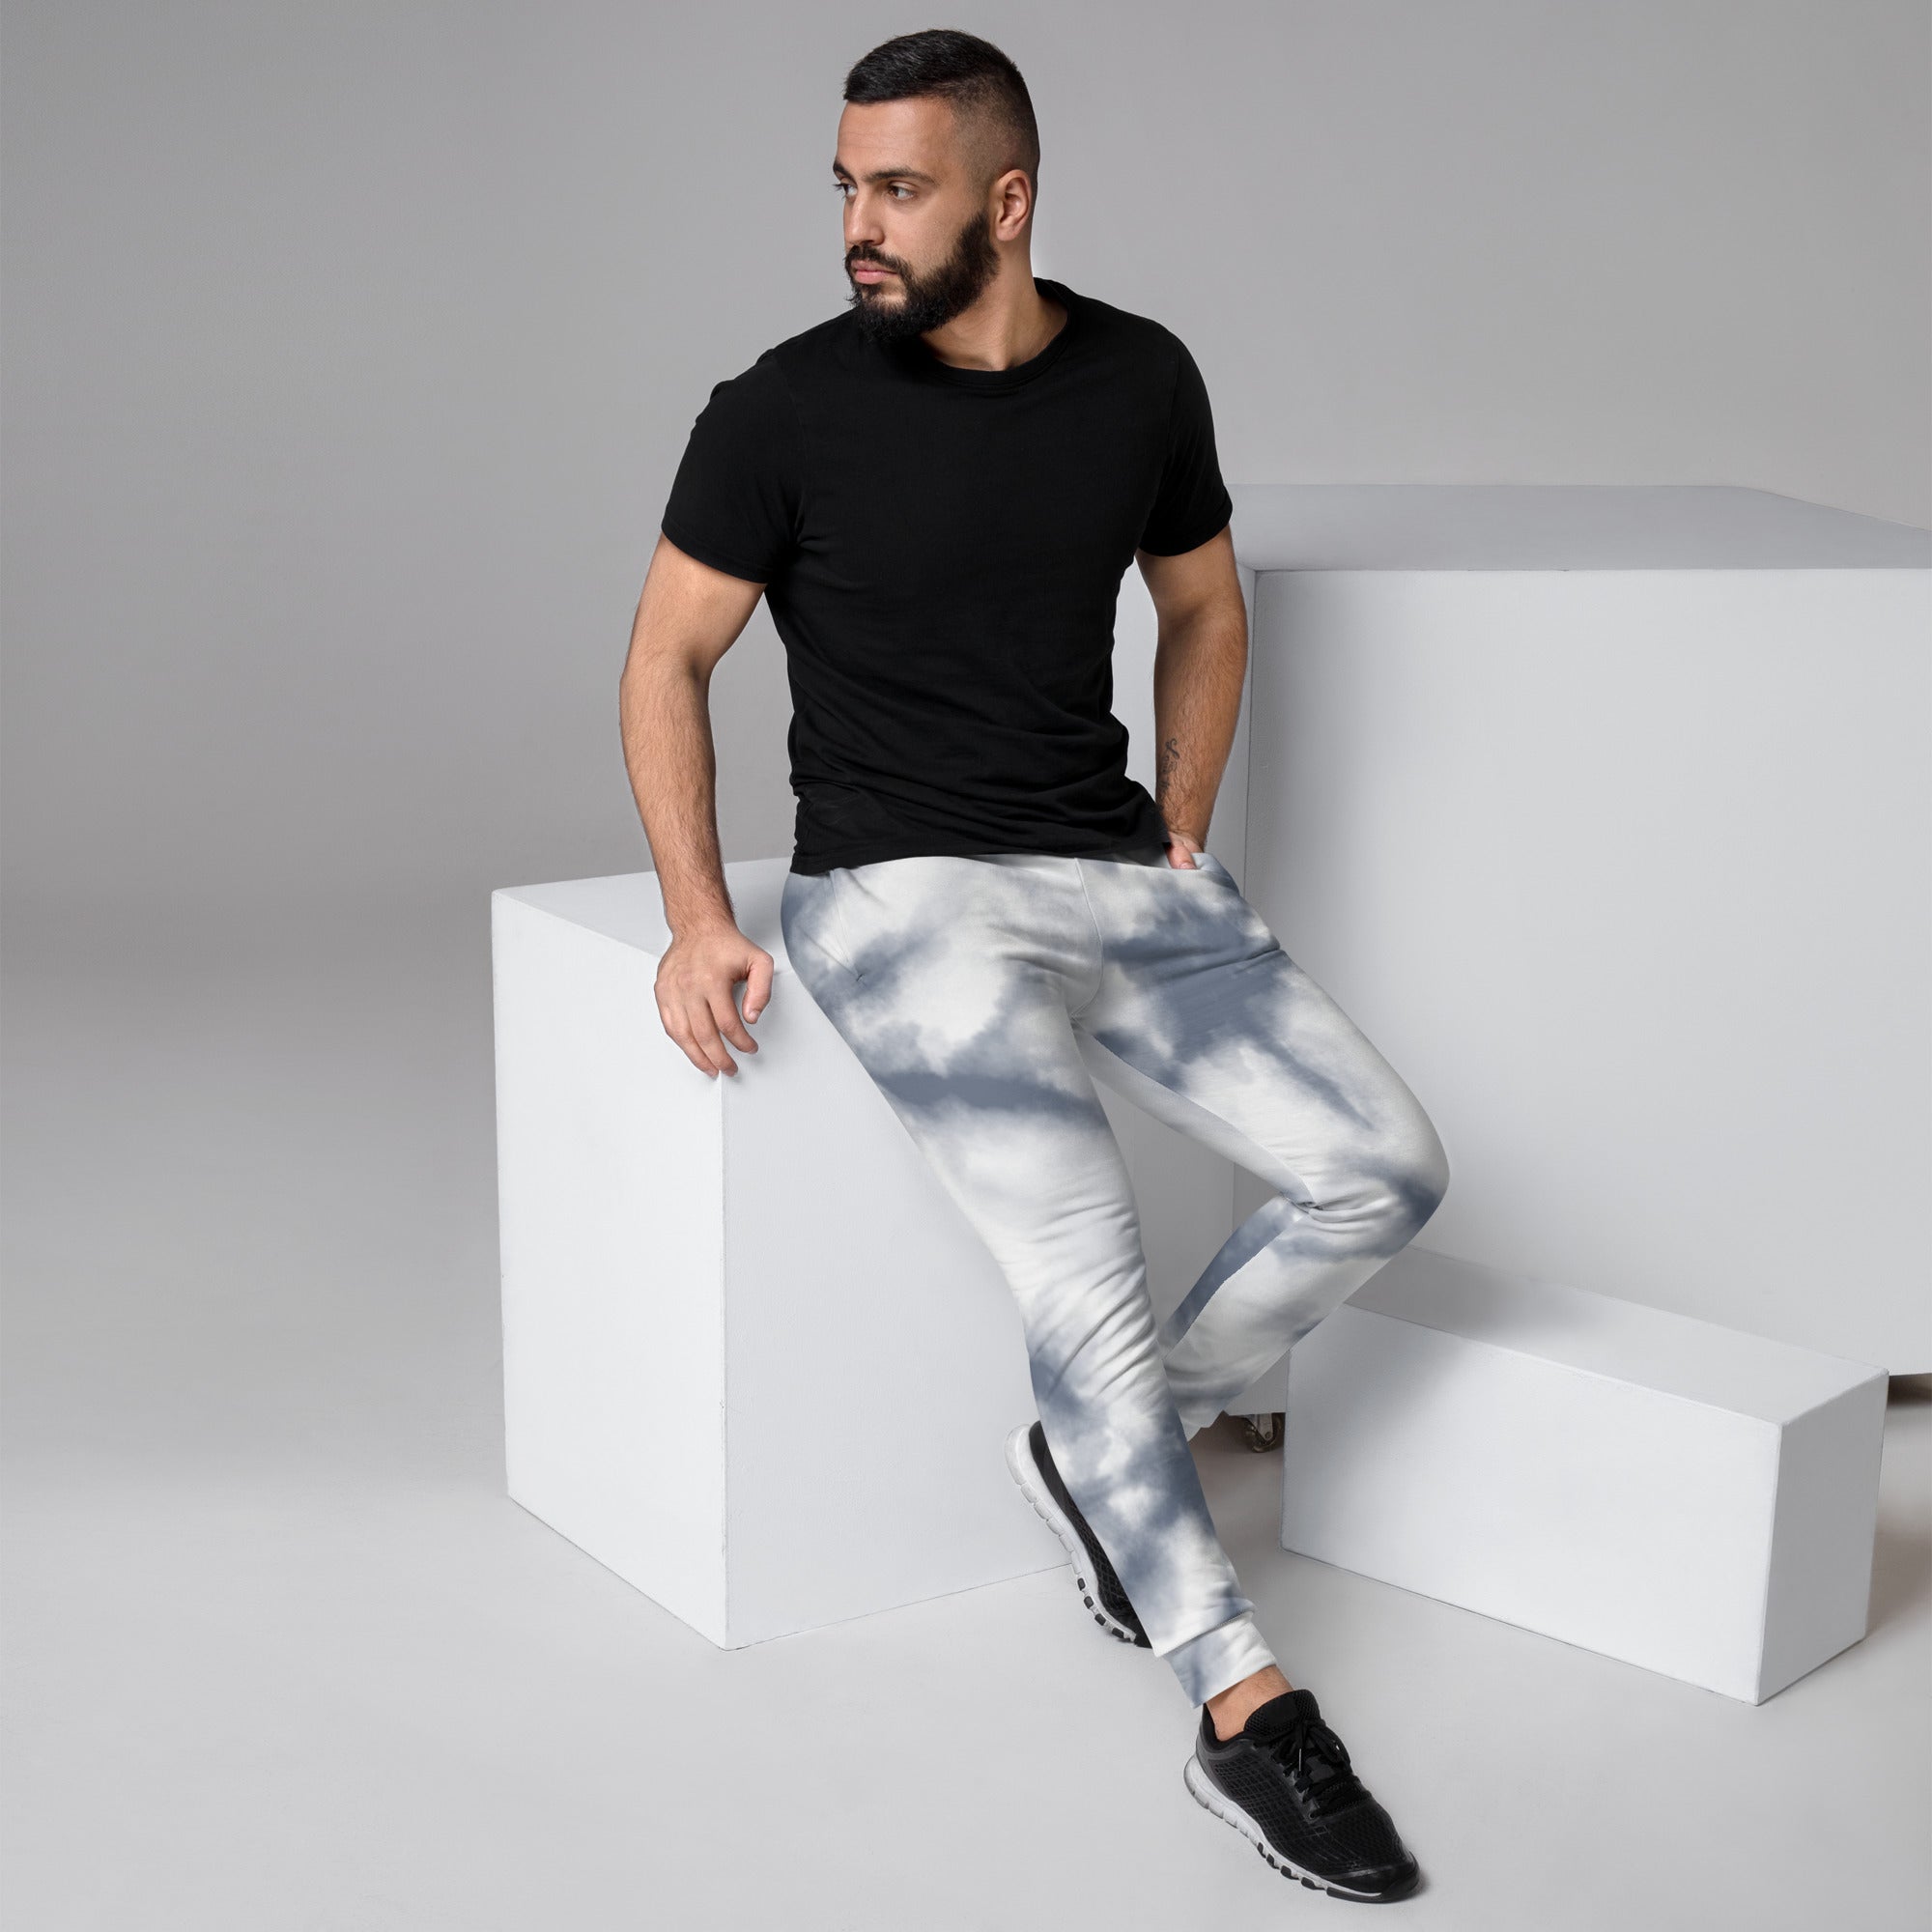 Grey White Abstract Men's Joggers, Tie Dye Casual Minimalist Slim-Fit Designer Ultra Soft & Comfortable Men's Joggers, Men's Jogger Pants-Made in USA/EU/MX (US Size: XS-3XL) 